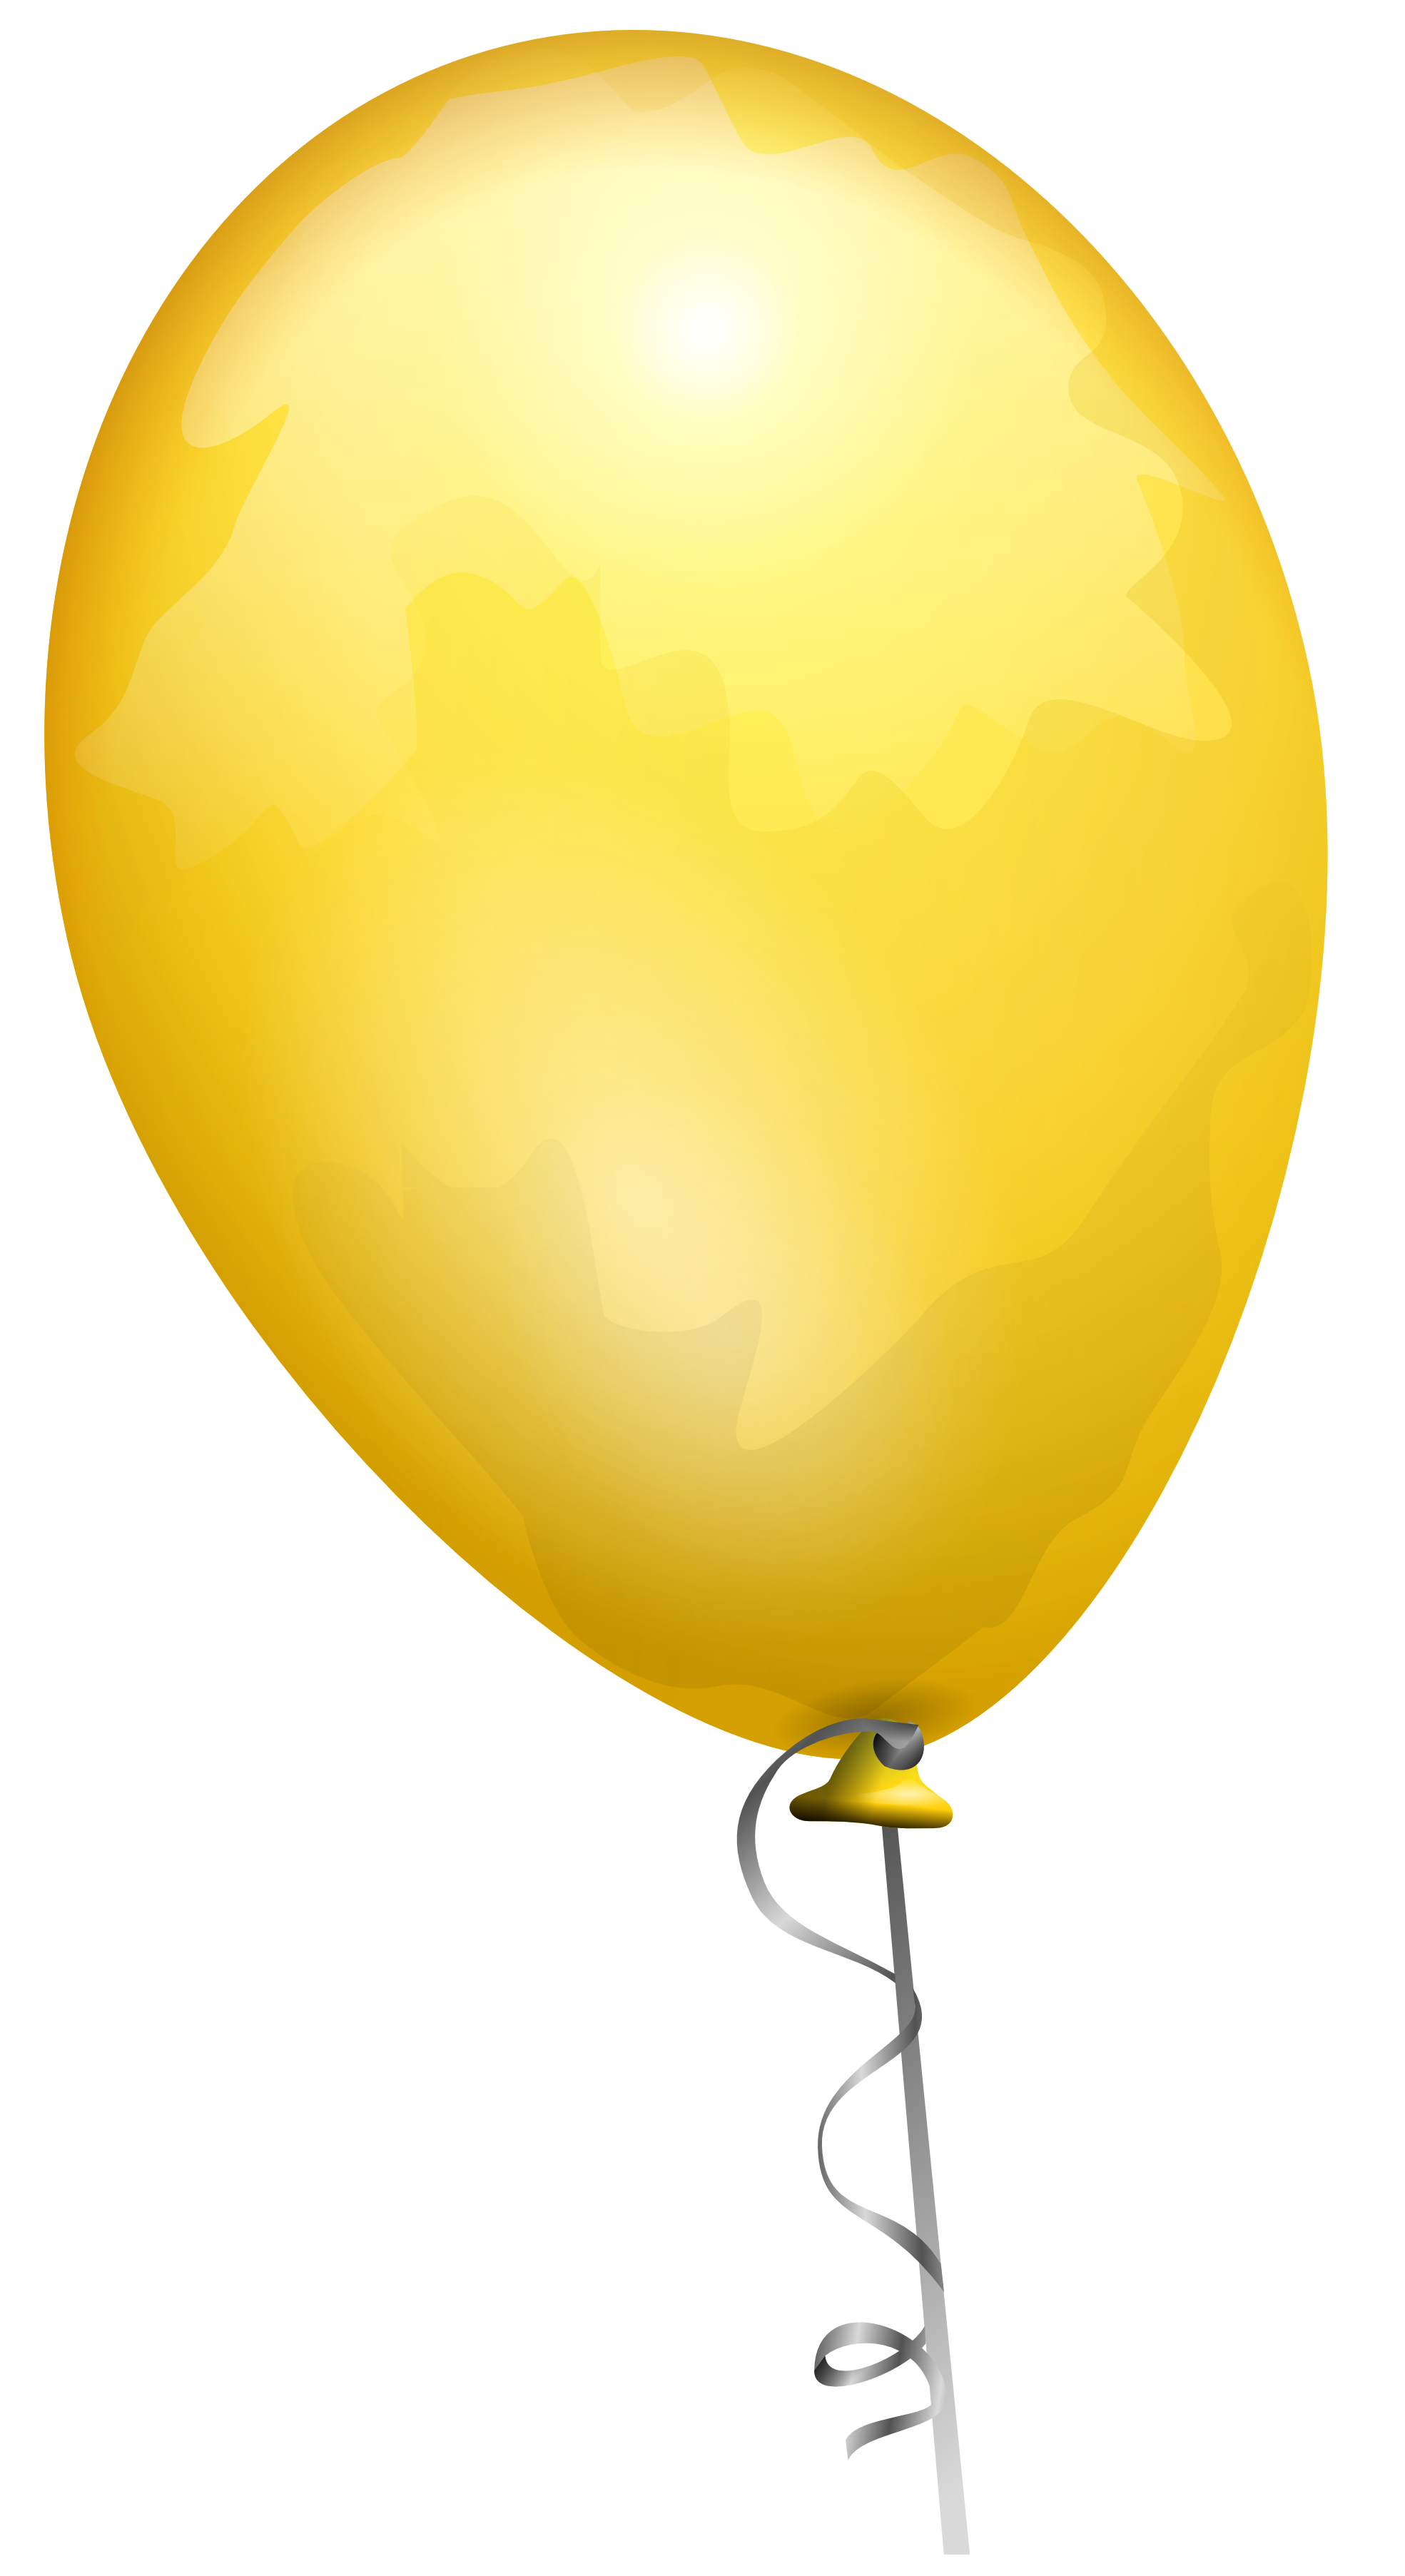 Balloon PNG image, free download, balloons